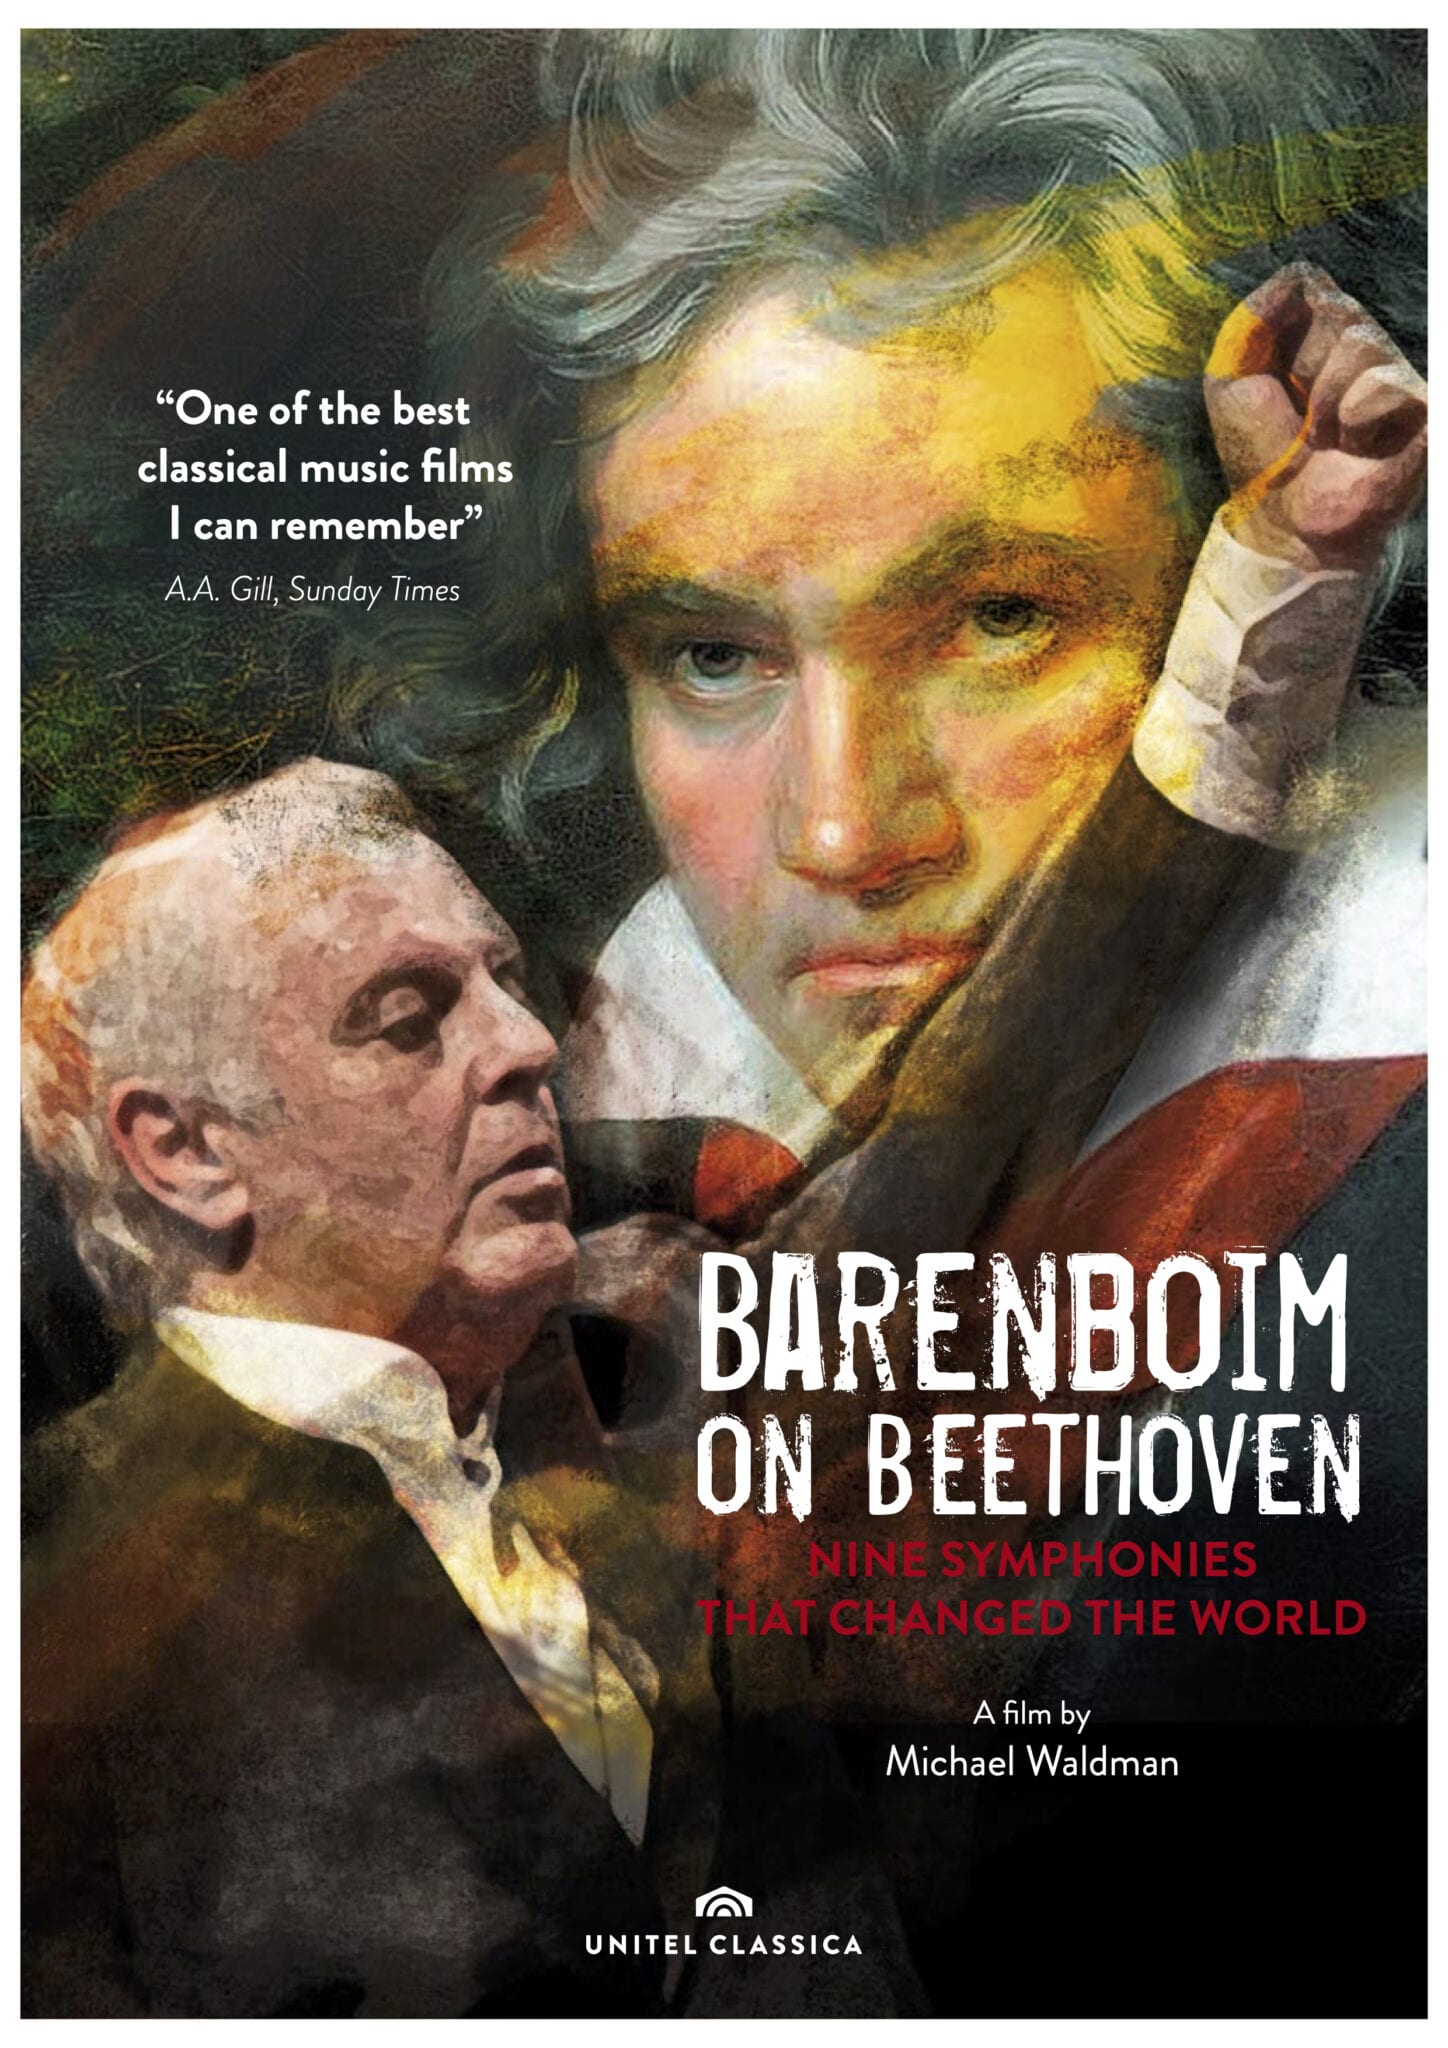 Barenboim conducts Beethoven’s Symphony No. 9